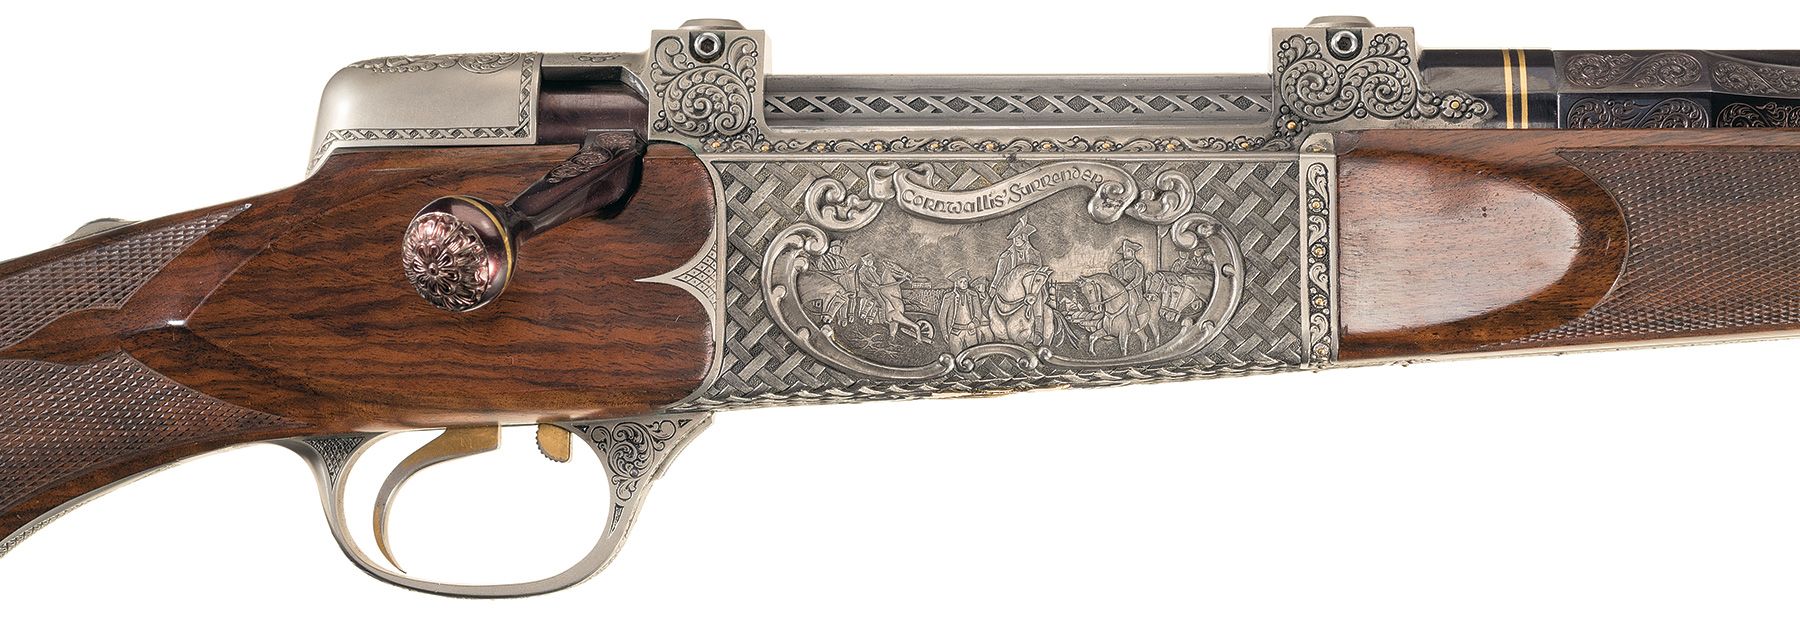 Haskins Rifle Company Bicentenial rifle